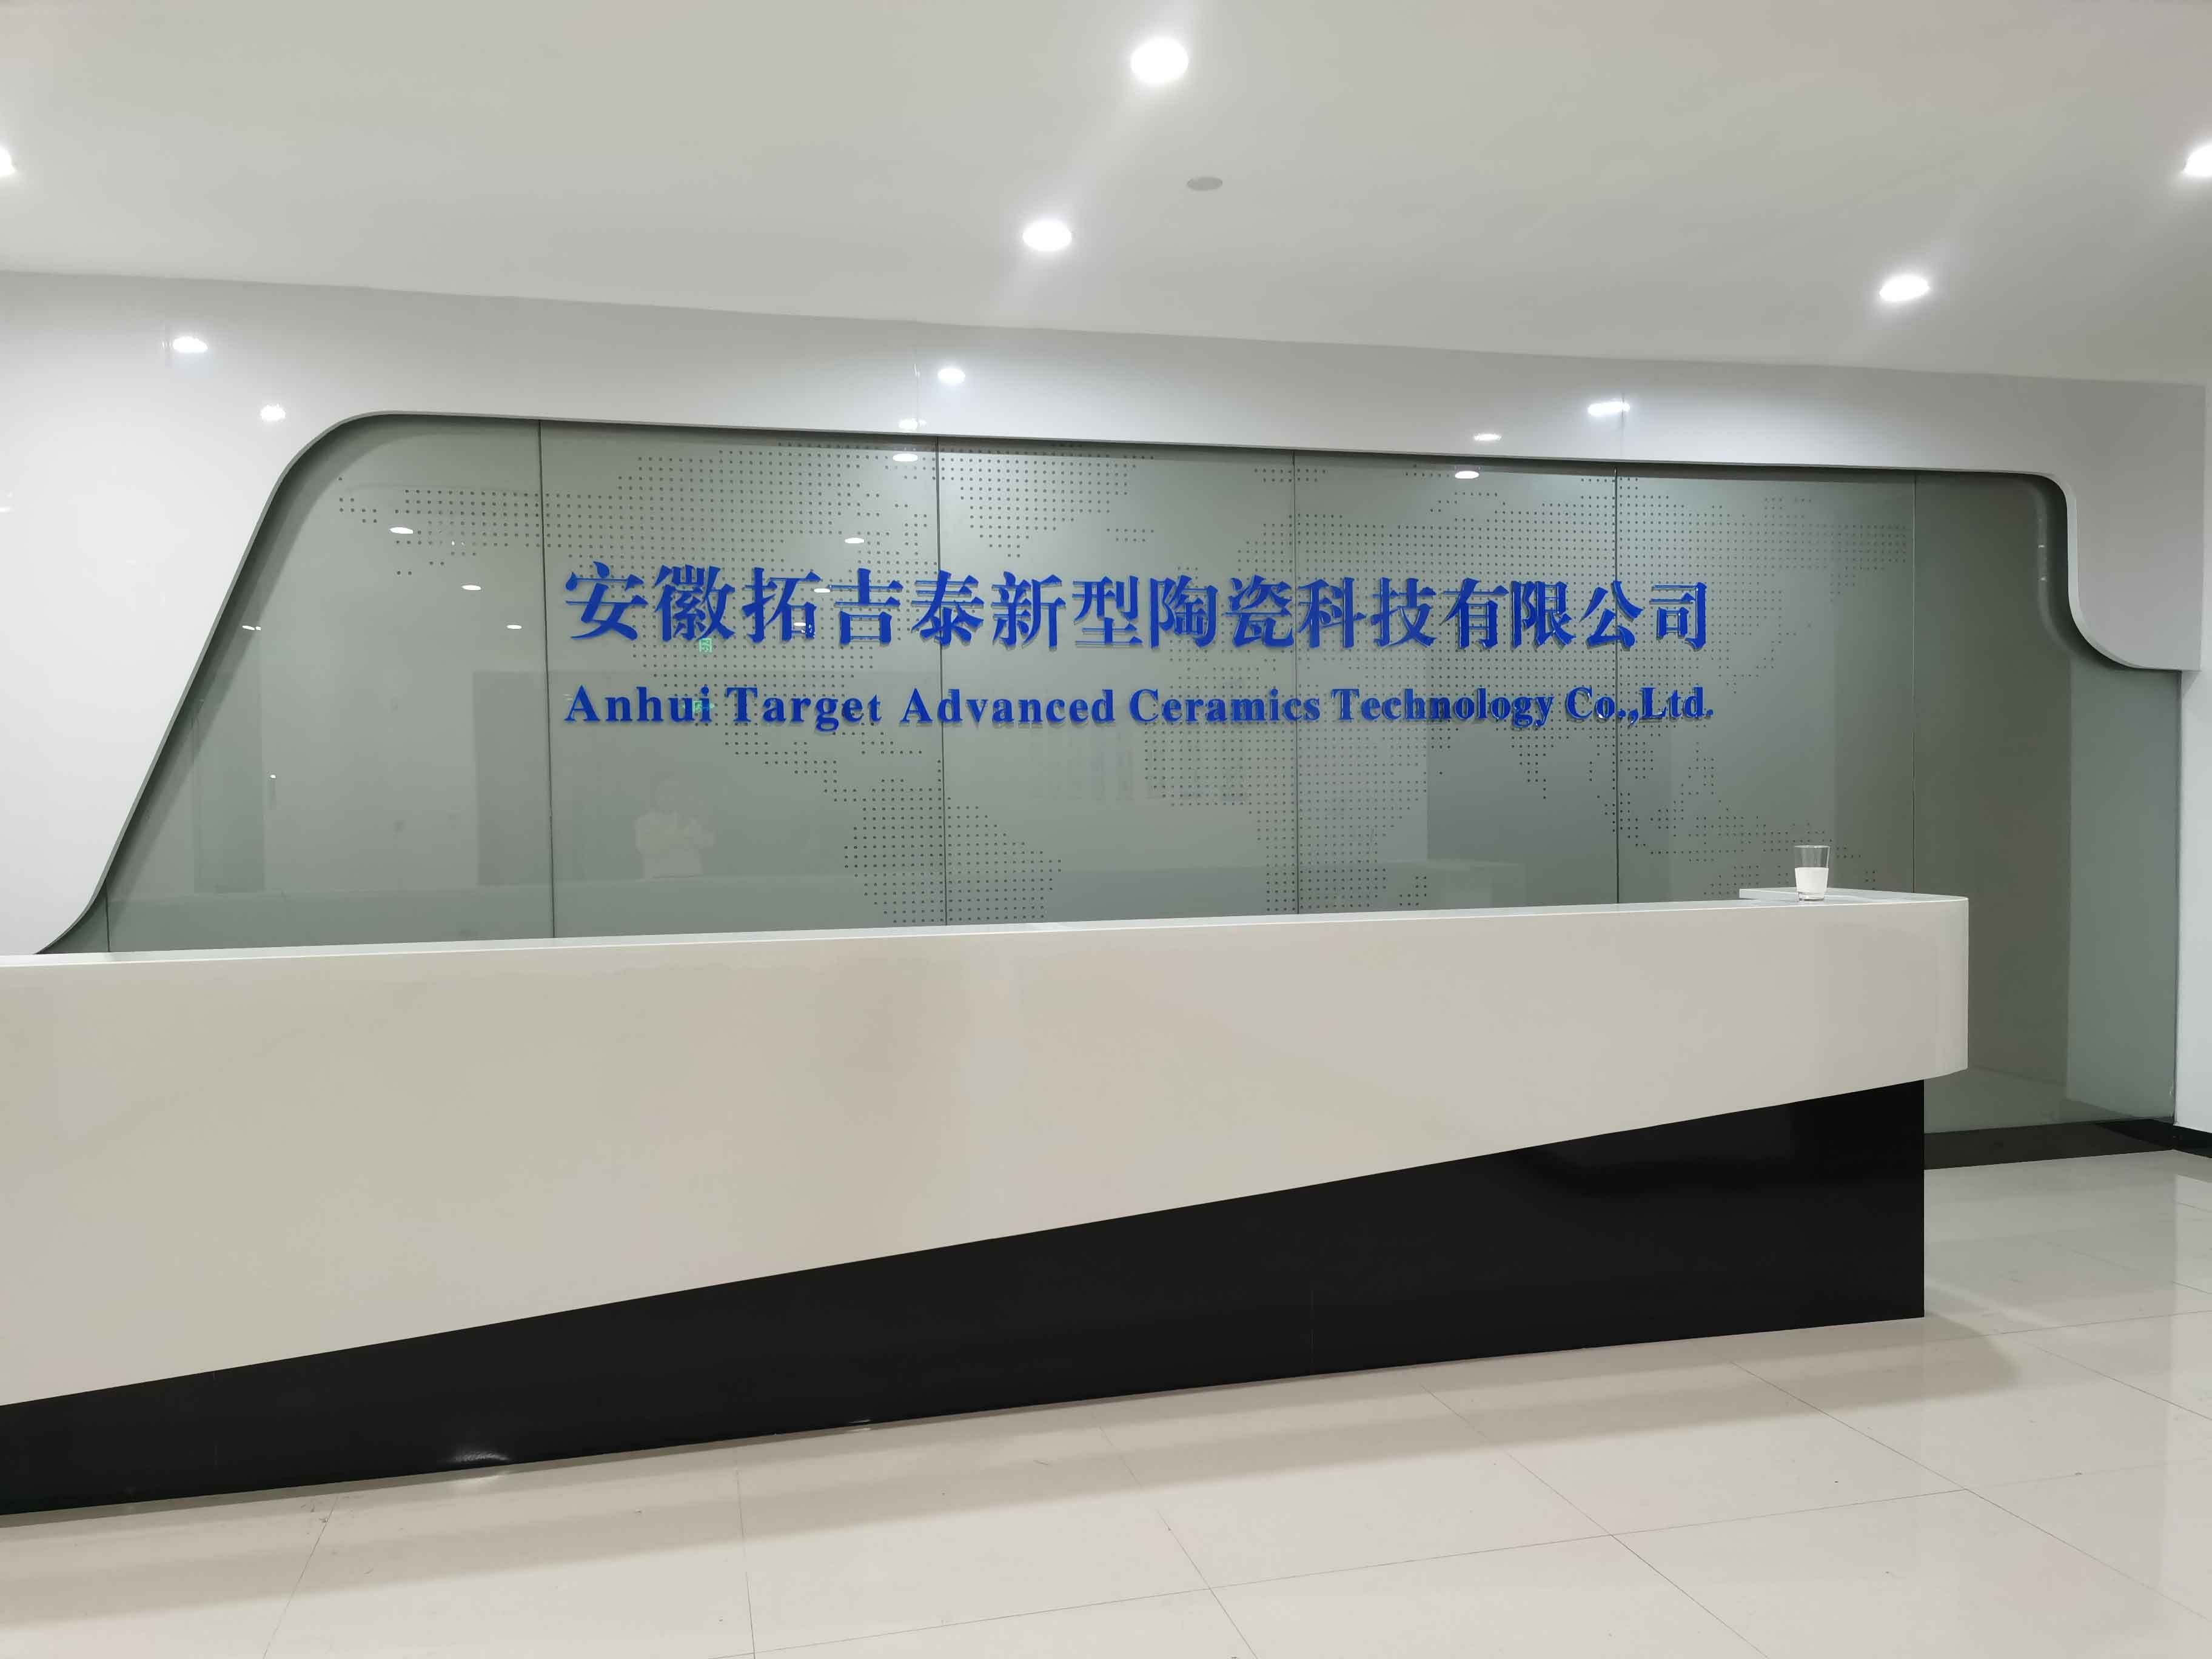 Anhui Target Advanced Ceramics Technology Co; Ltd